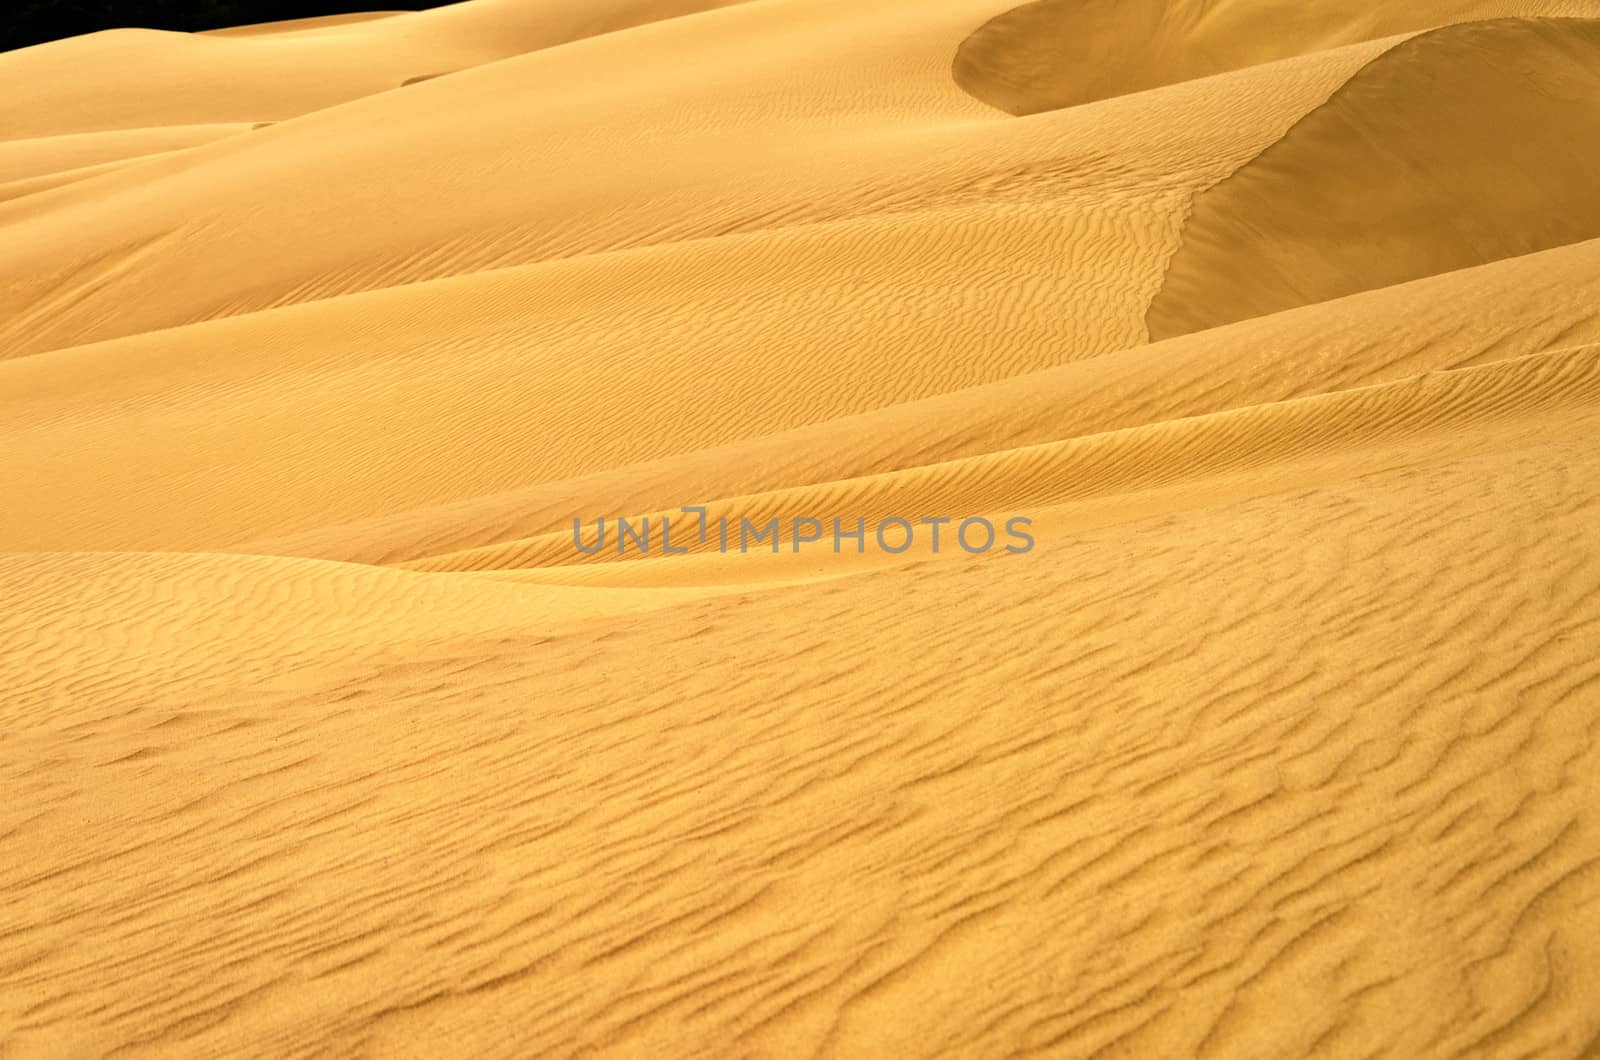 Stunning Sand Dune View by jkraft5